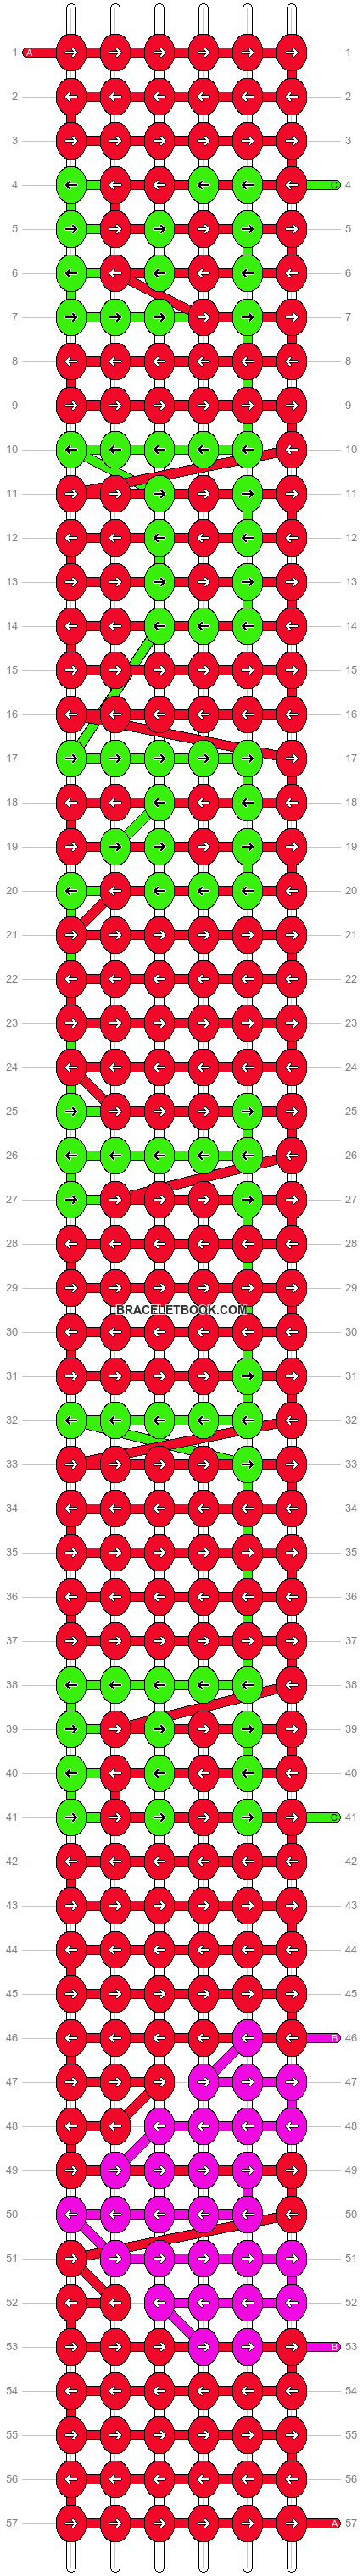 Alpha pattern #6712 pattern